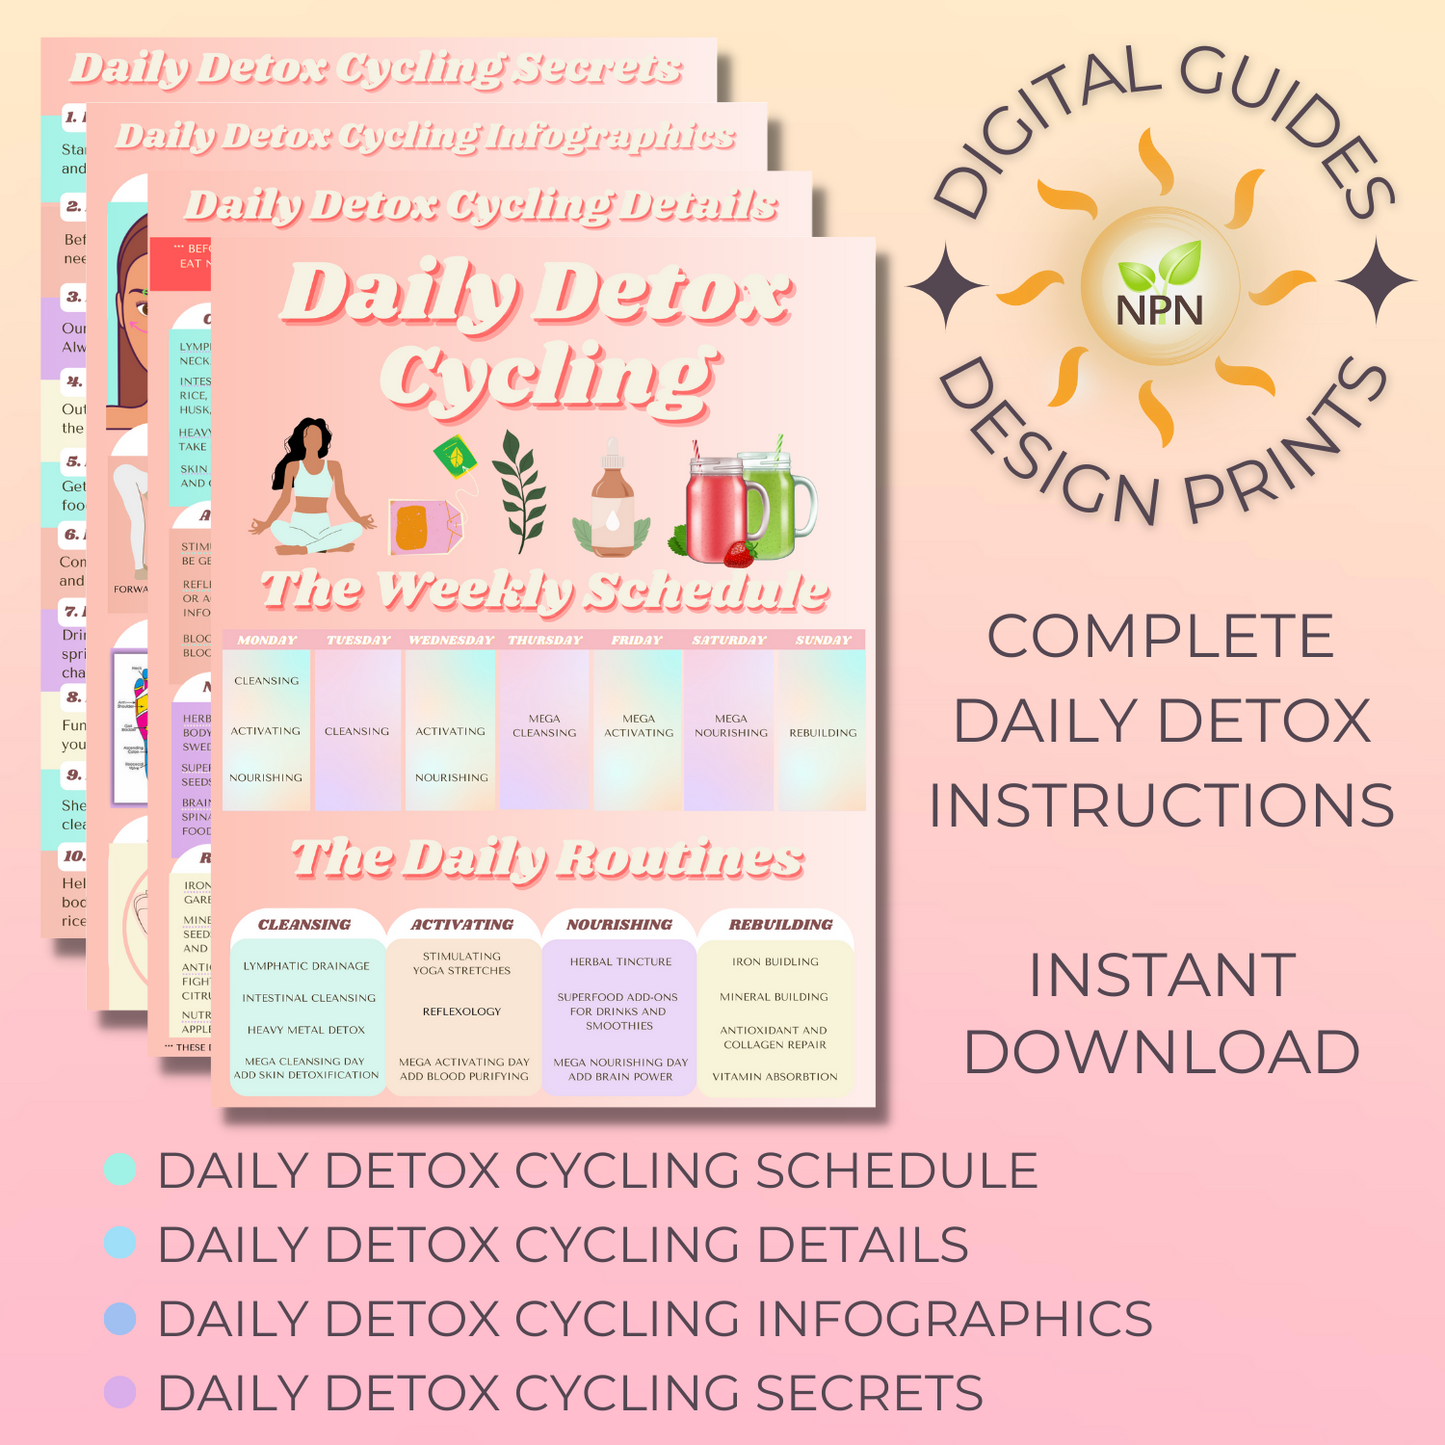 Daily Detox Cycling Calendar to Create an Effective Detox Routine